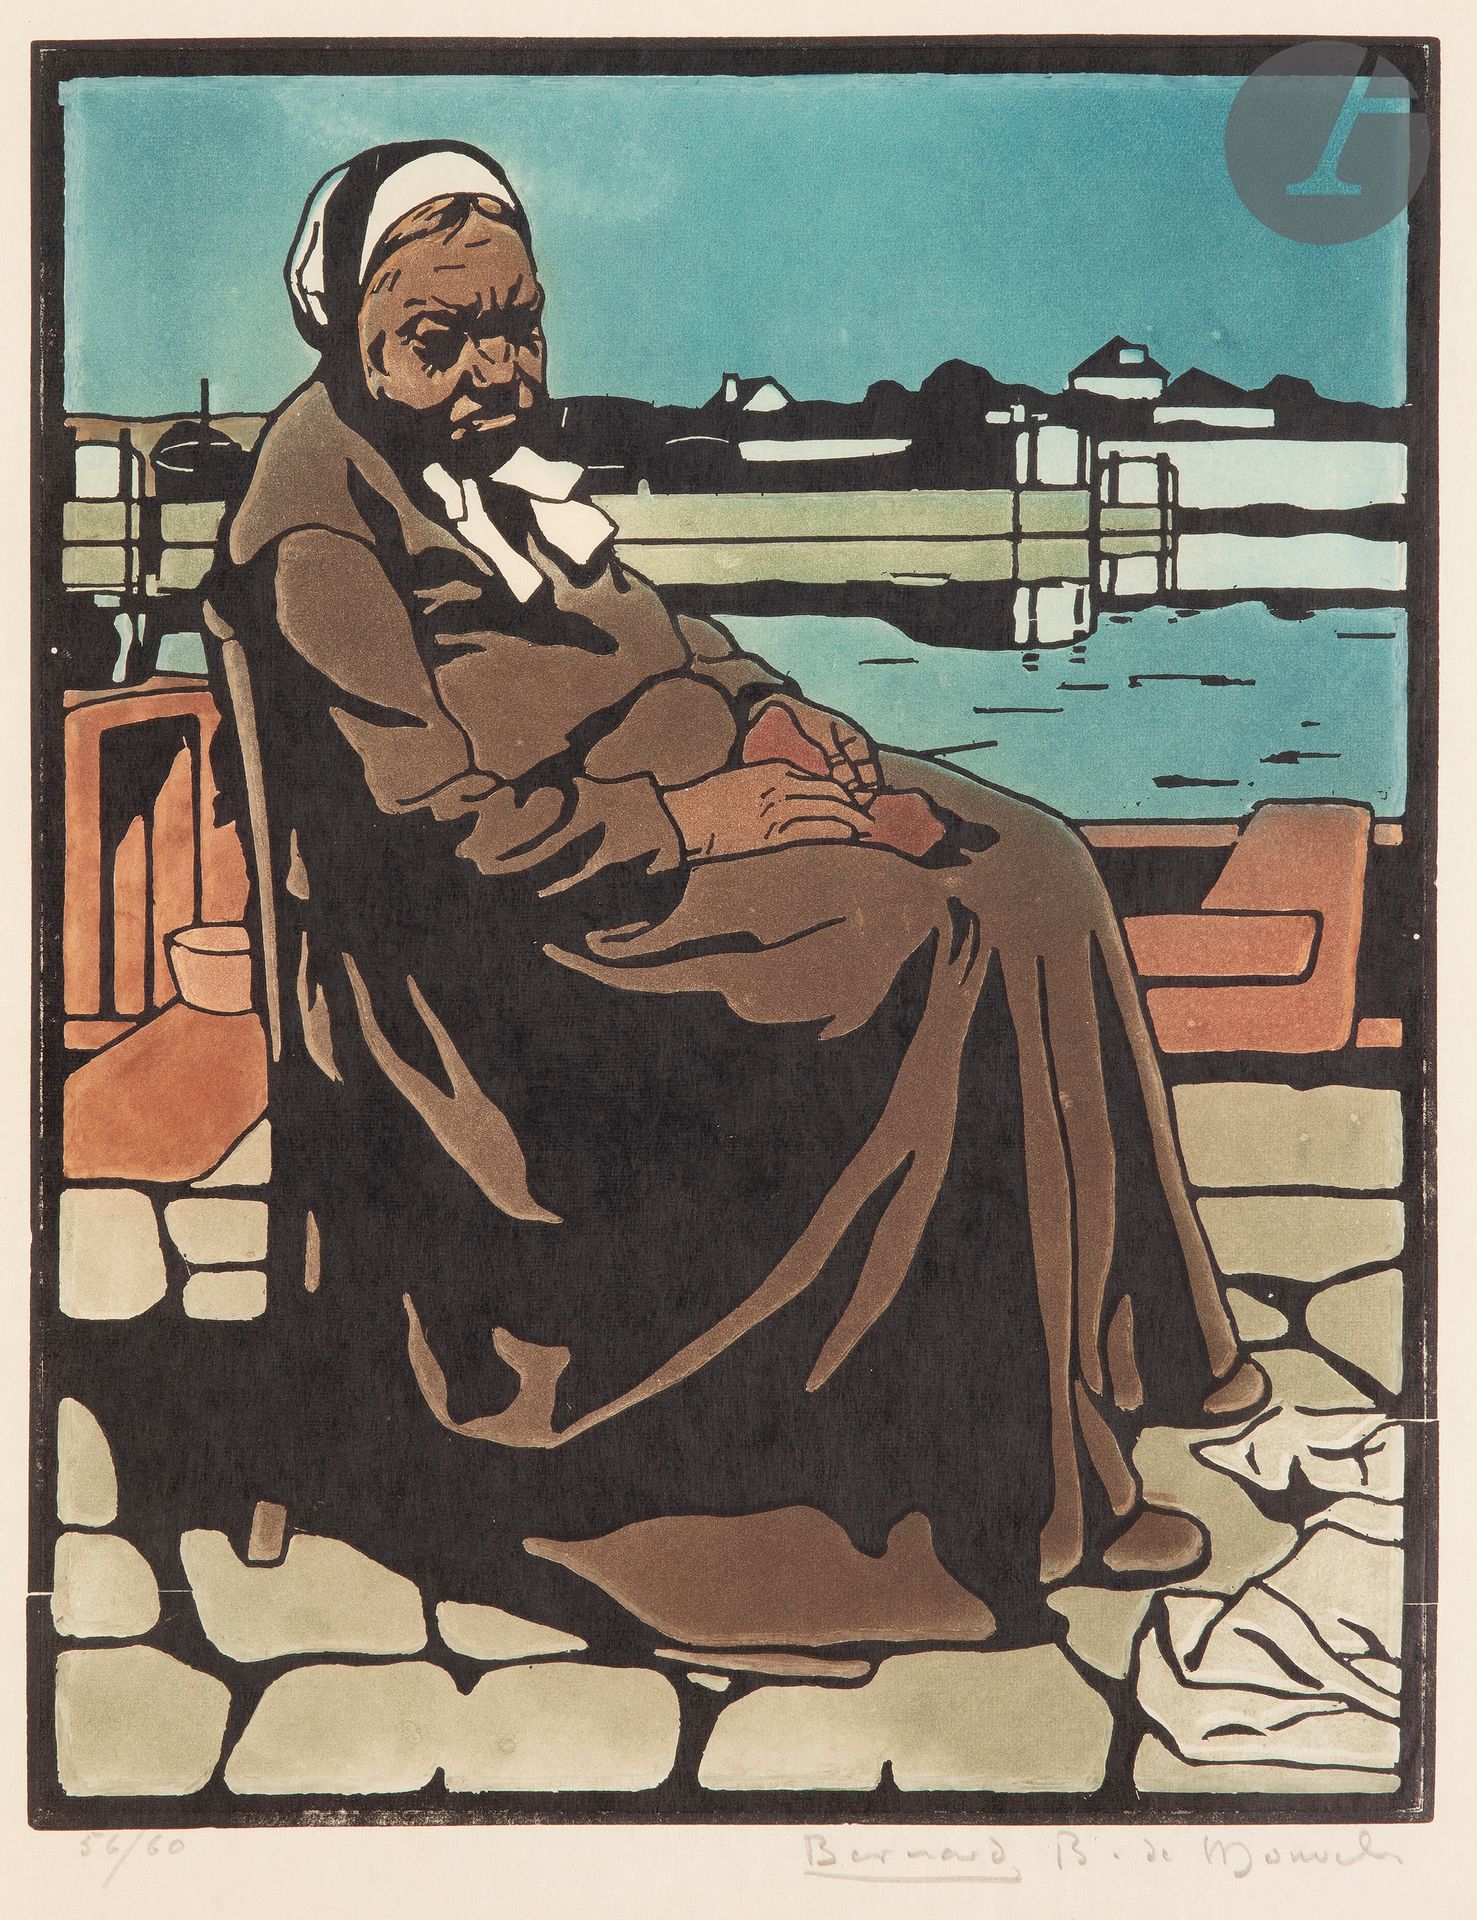 Null 伯纳德-布泰-德-蒙维尔(1881-1949)

守锁人的妻子》。1904.木刻，242 x 305 mm。以彩色印刷。在薄薄的象牙色牛皮纸上有非常漂&hellip;